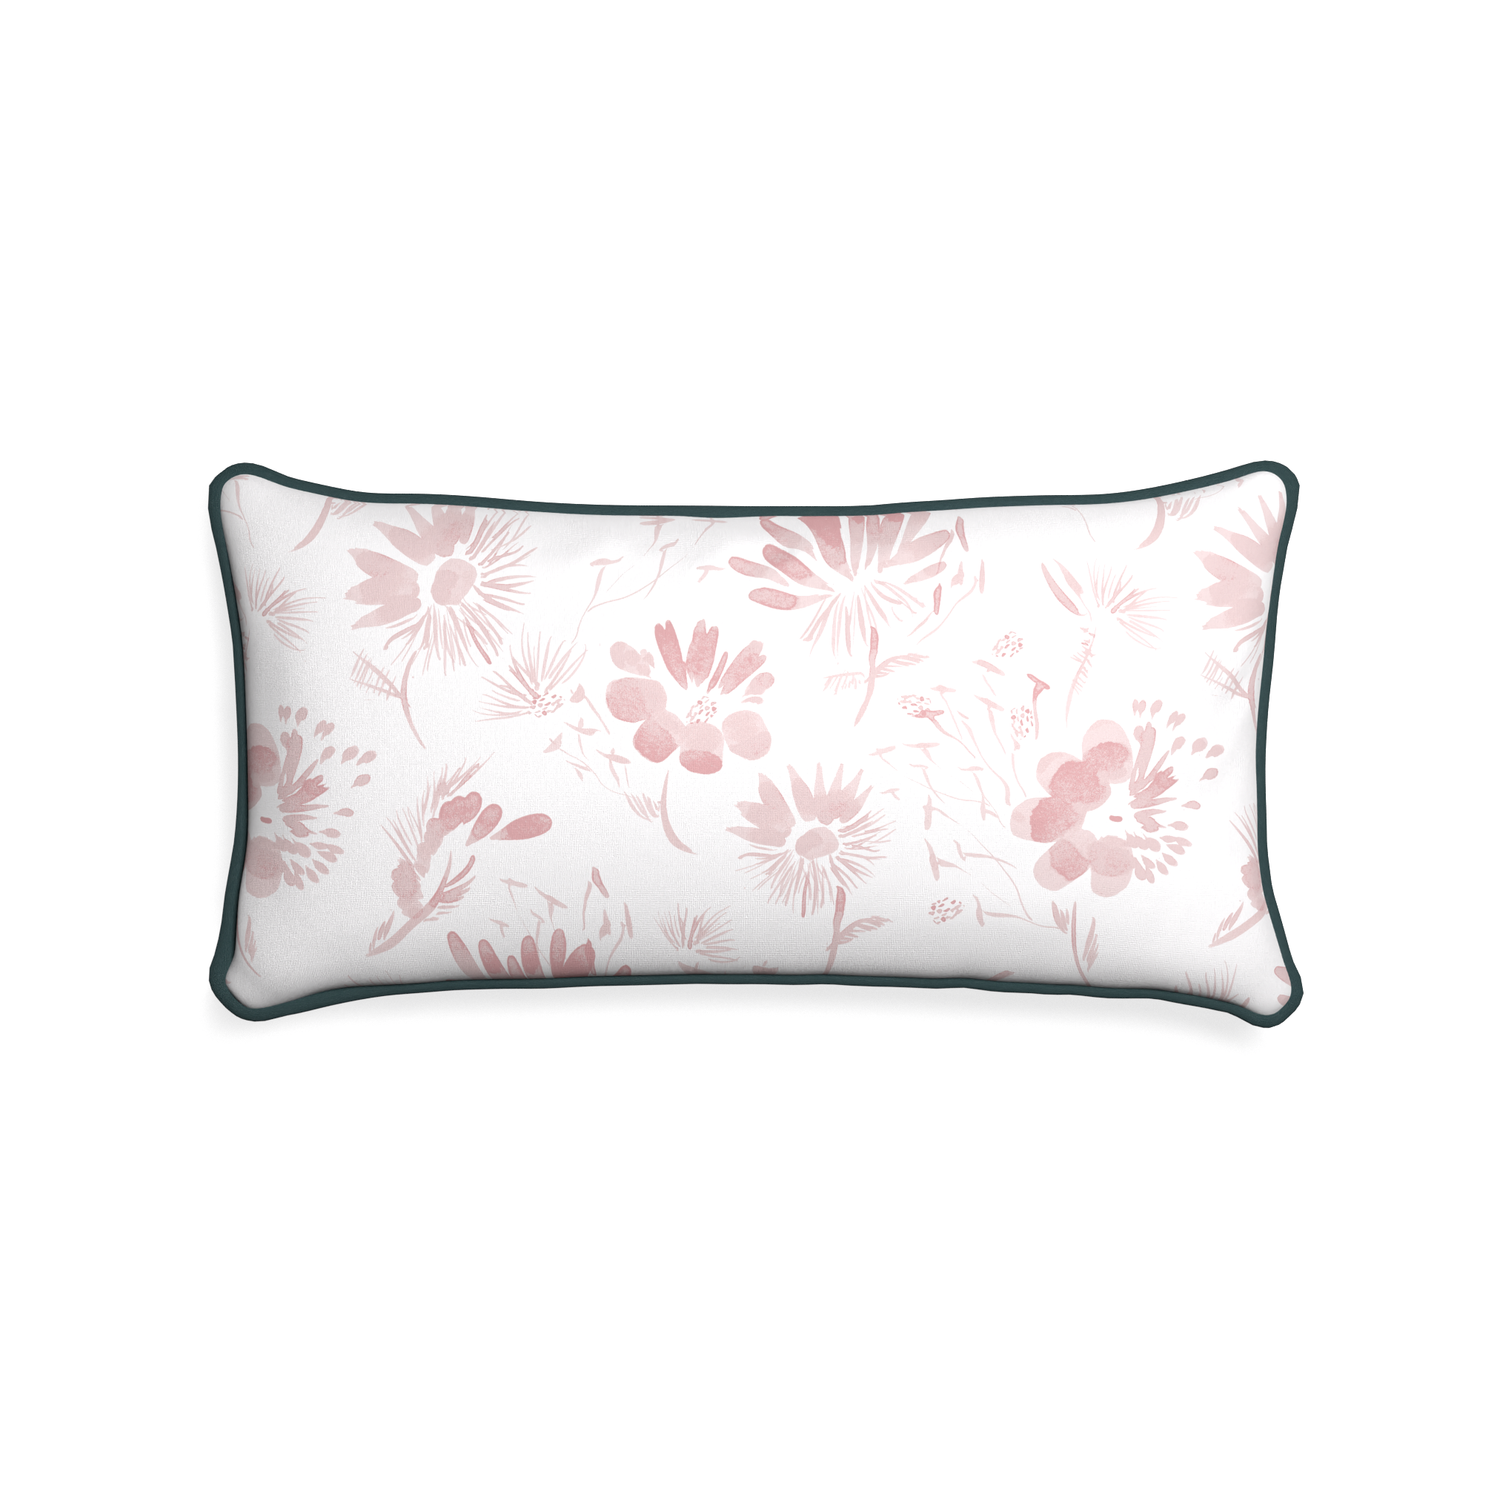 Midi-lumbar blake custom pink floralpillow with p piping on white background